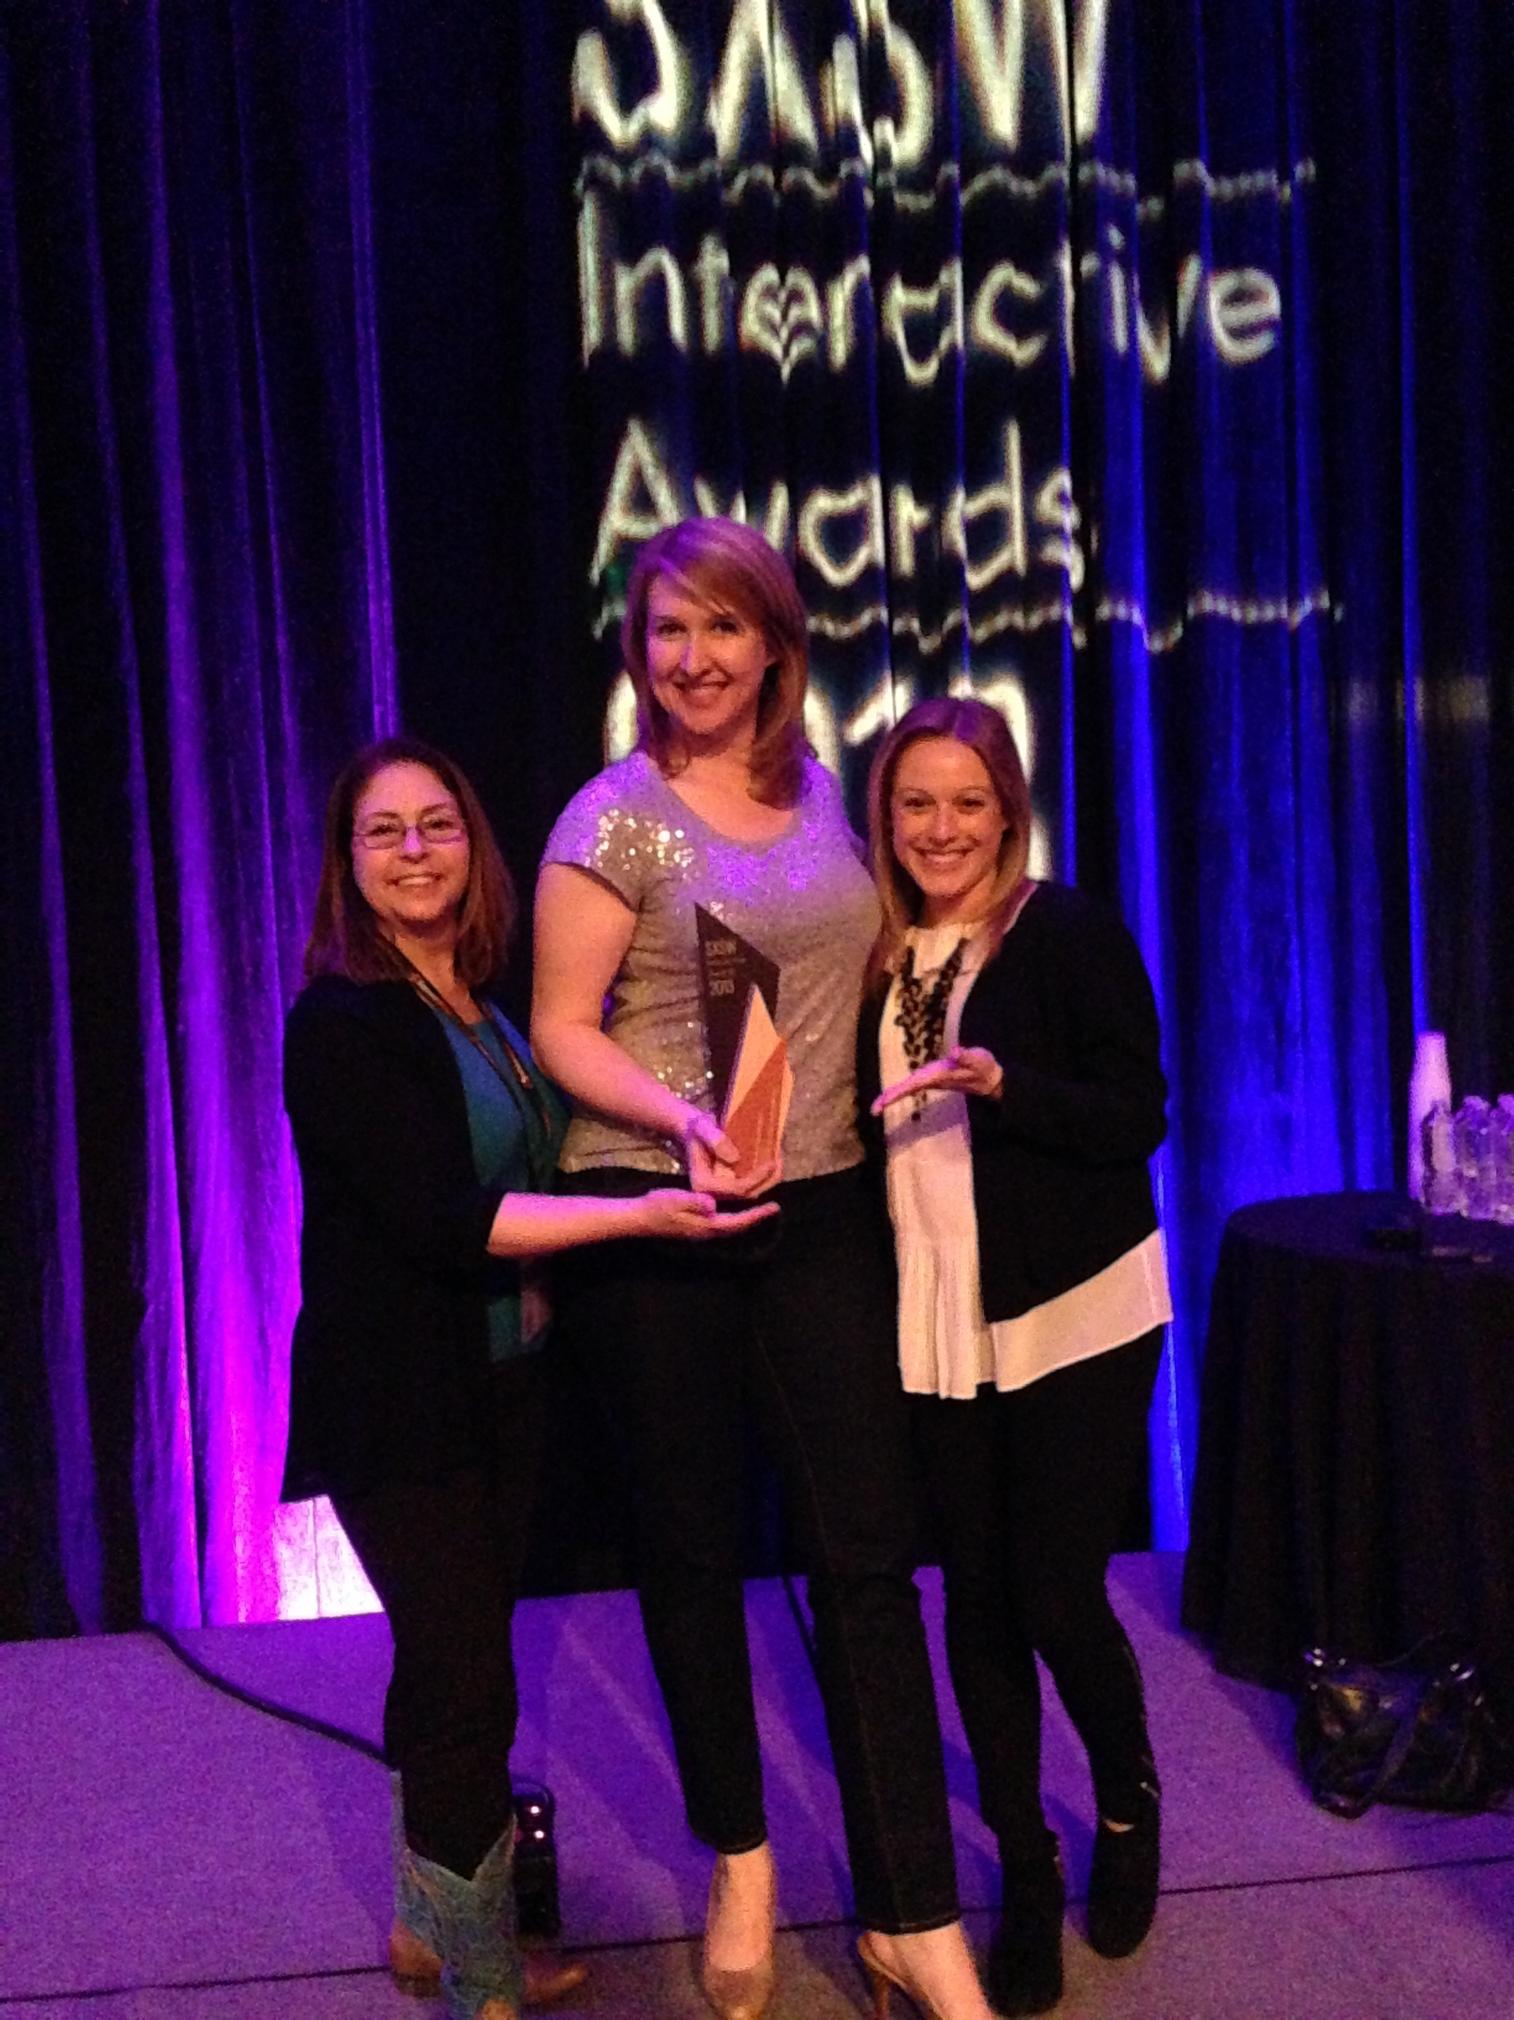 SXSW Interactive Award